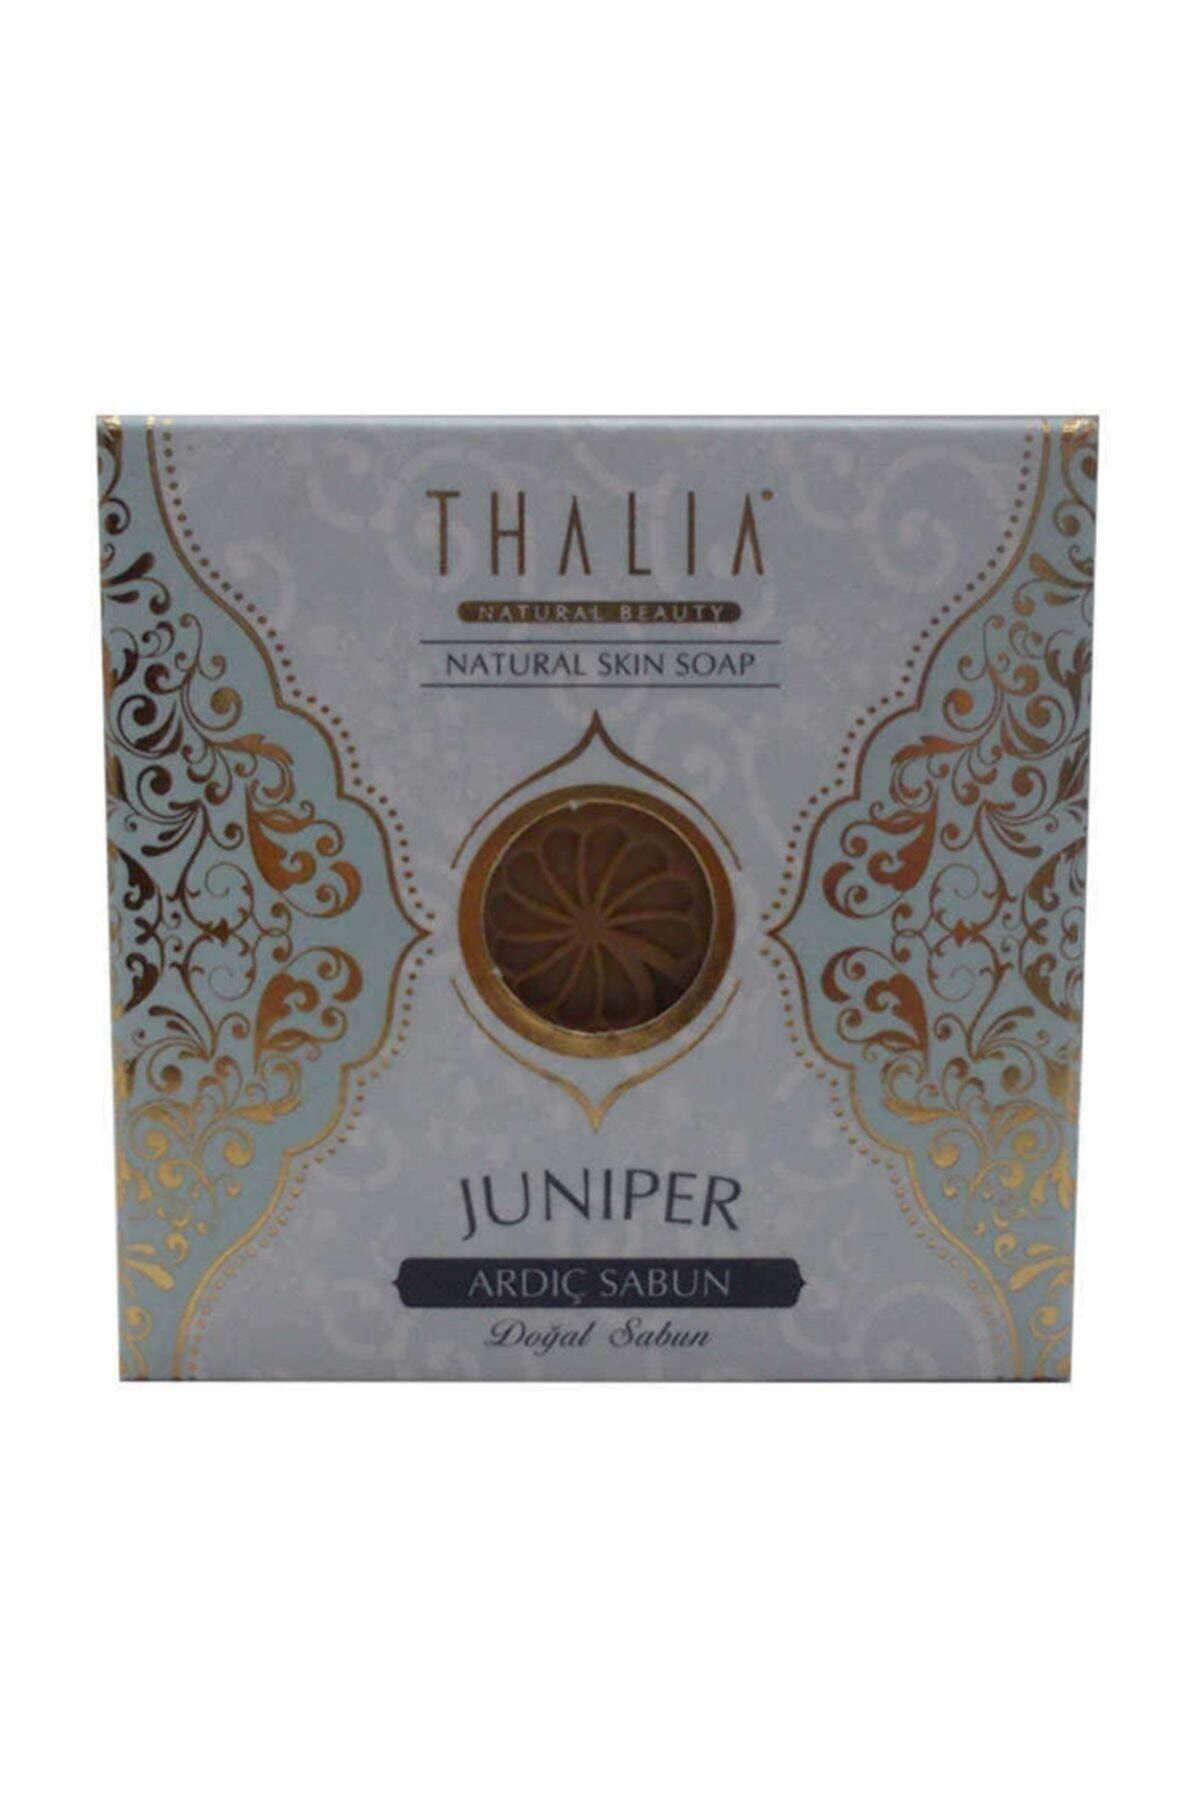 Thalia Akne Karşıtı Ardıç Katranlı Doğal Katı Sabun 125 gr